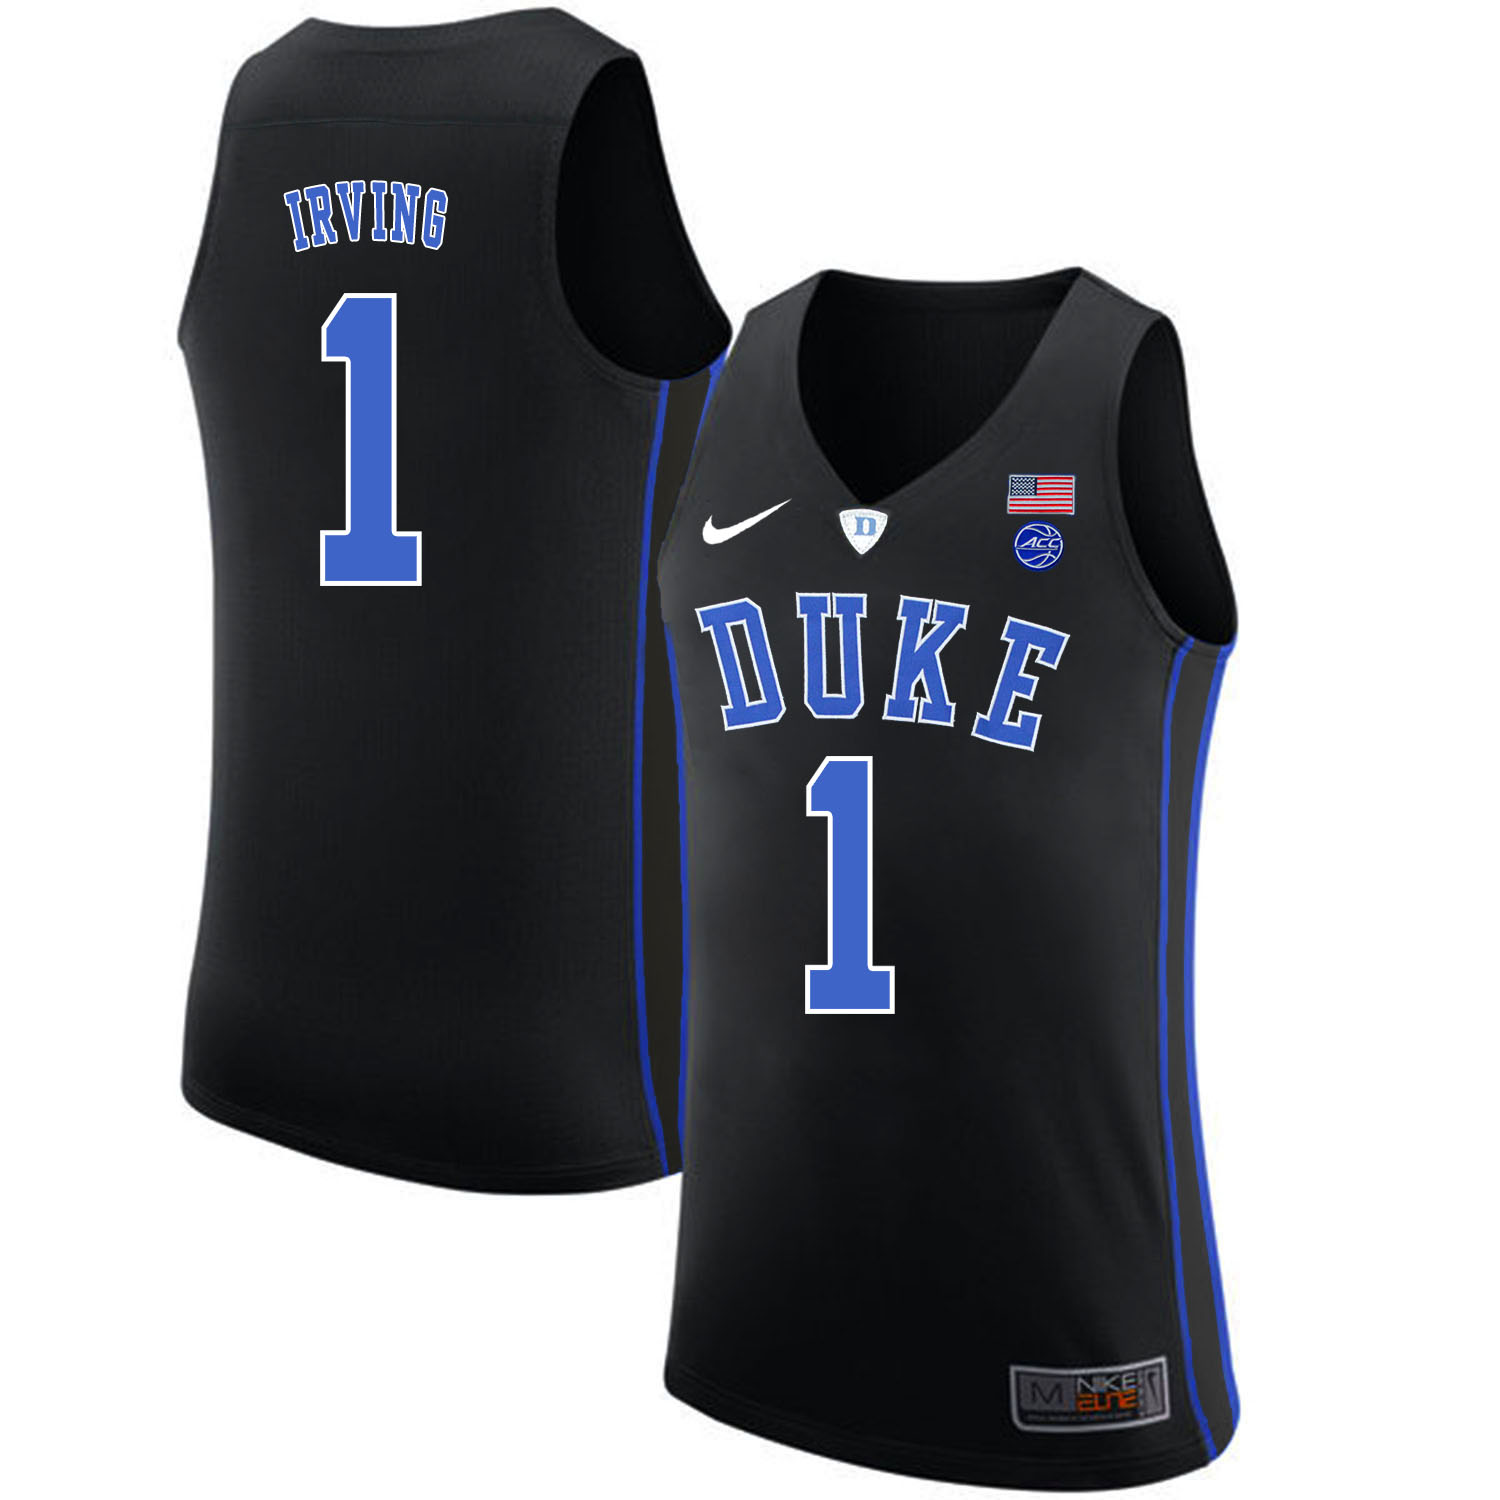 Duke Blue Devils 1 Kyrie Irving Black Nike College Basketabll Jersey